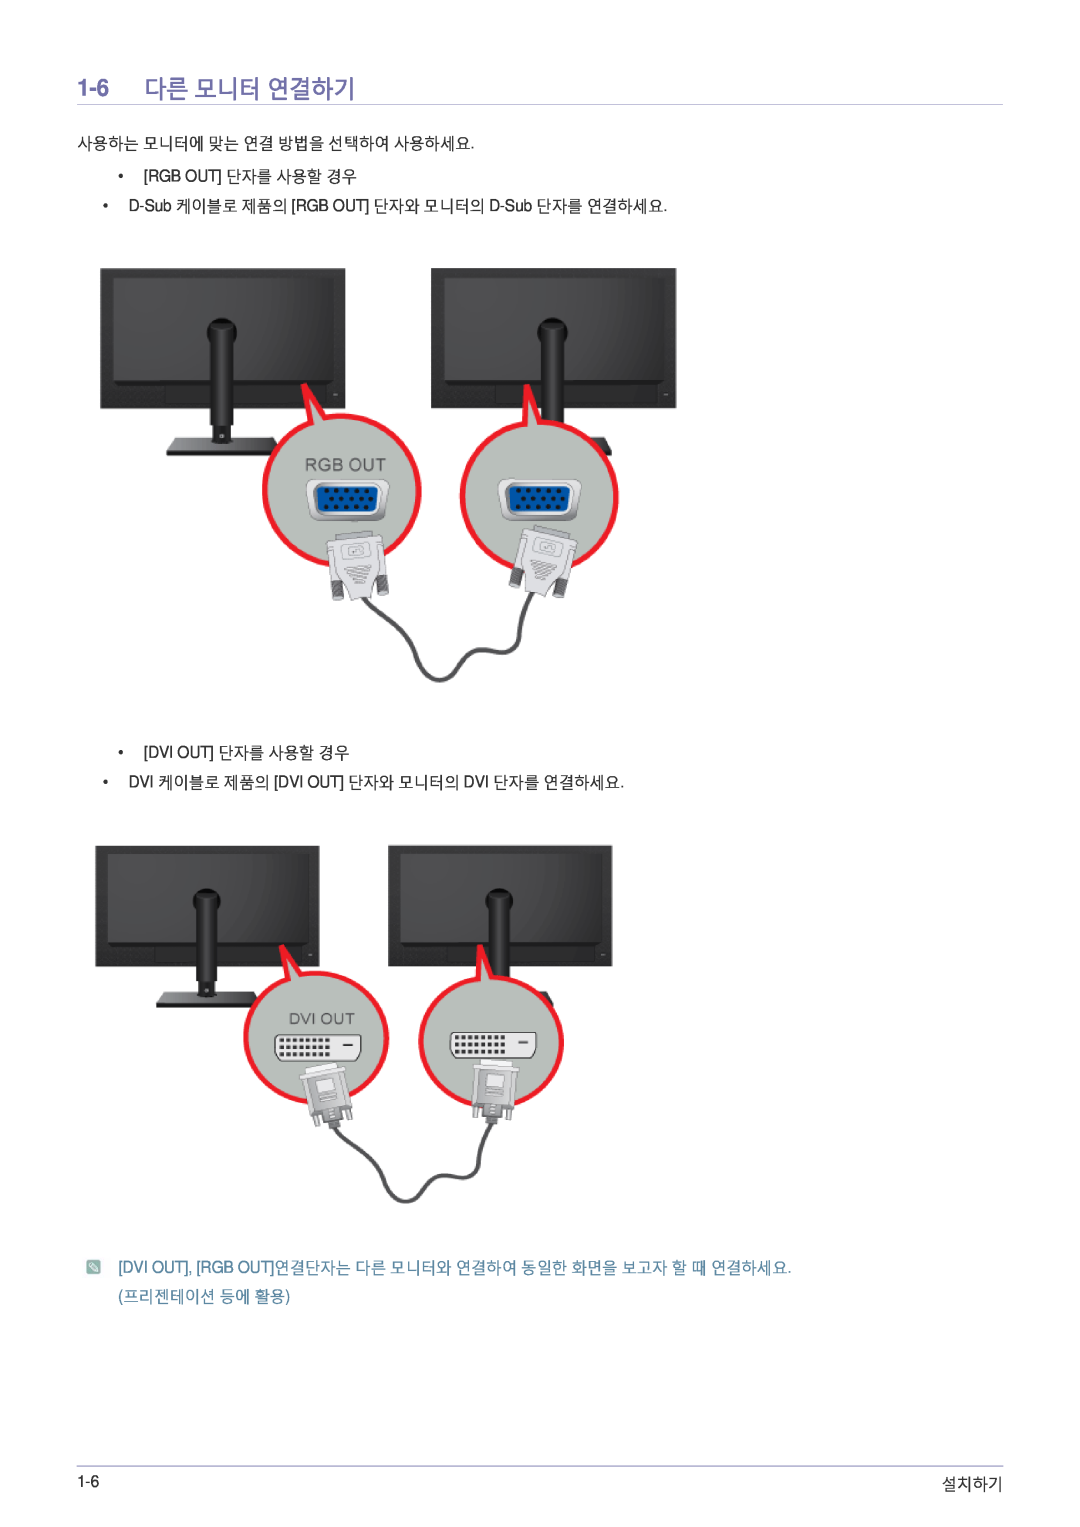 Samsung BN59-00954A_02 quick start 1-6 다른 모니터 연결하기, 사용하는 모니터에 맞는 연결 방법을 선택하여 사용하세요 Rgb Out 단자를 사용할 경우, 설치하기 